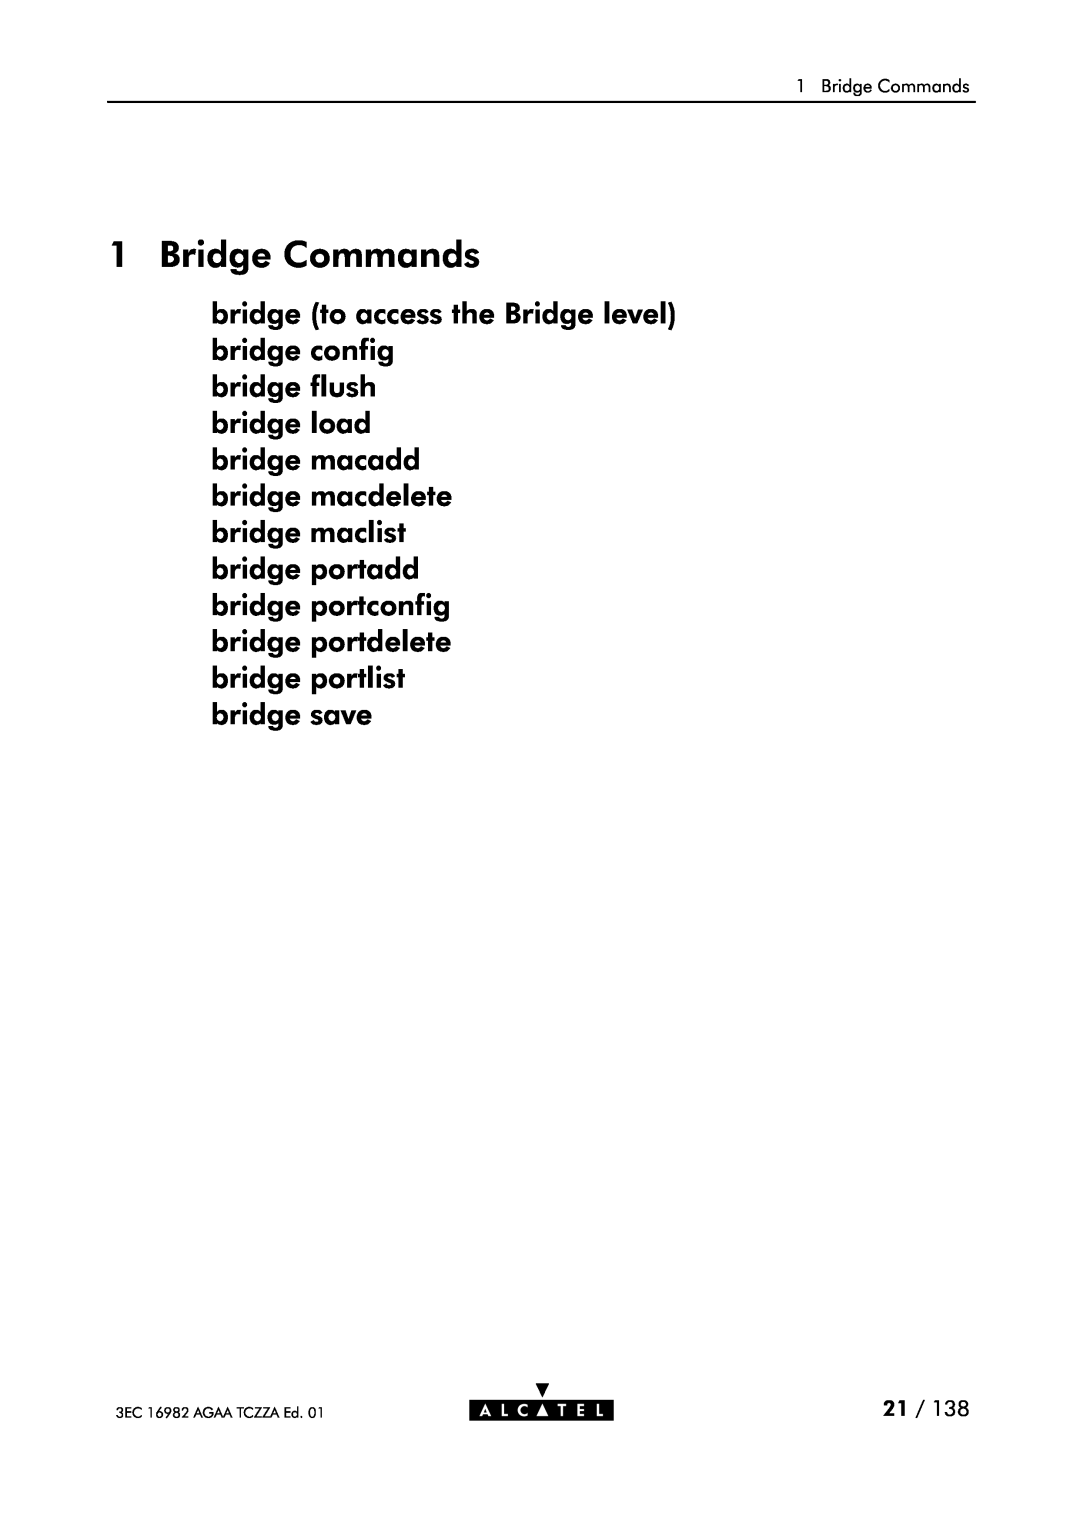 Alcatel Carrier Internetworking Solutions 350I manual Bridge Commands, bridge to access the Bridge level bridge config 